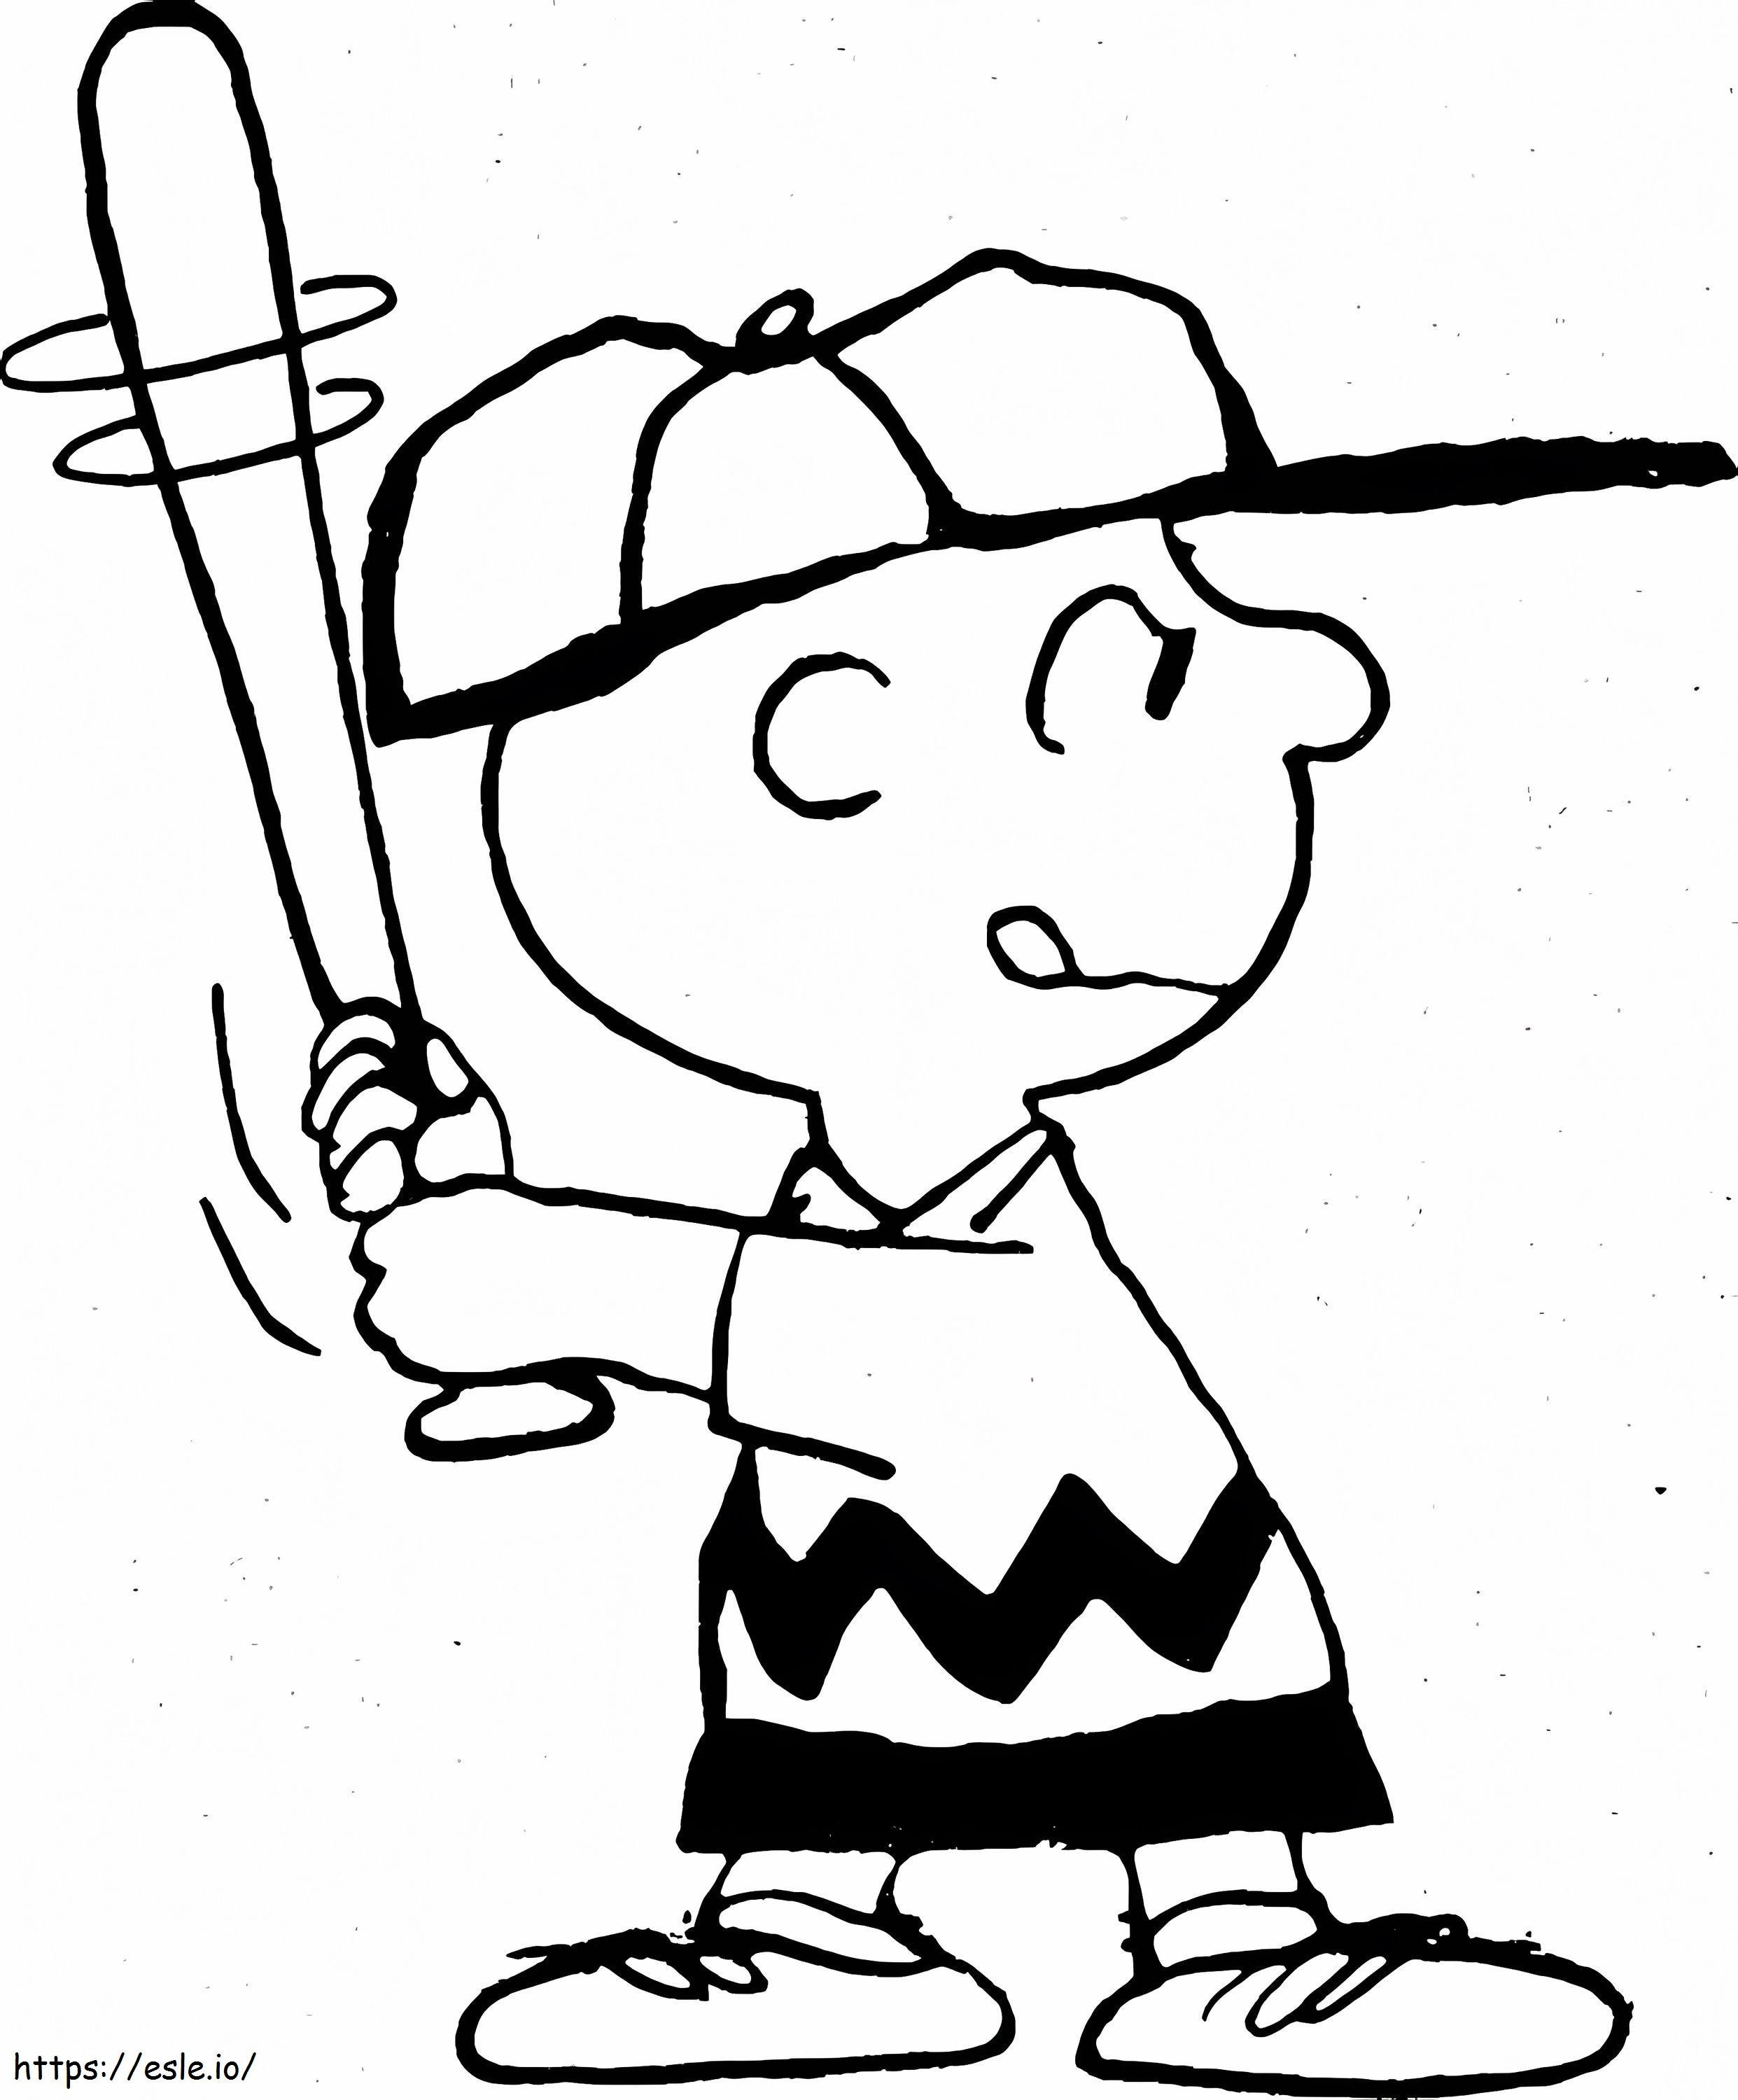 Charlie Brown és a baseball kifestő